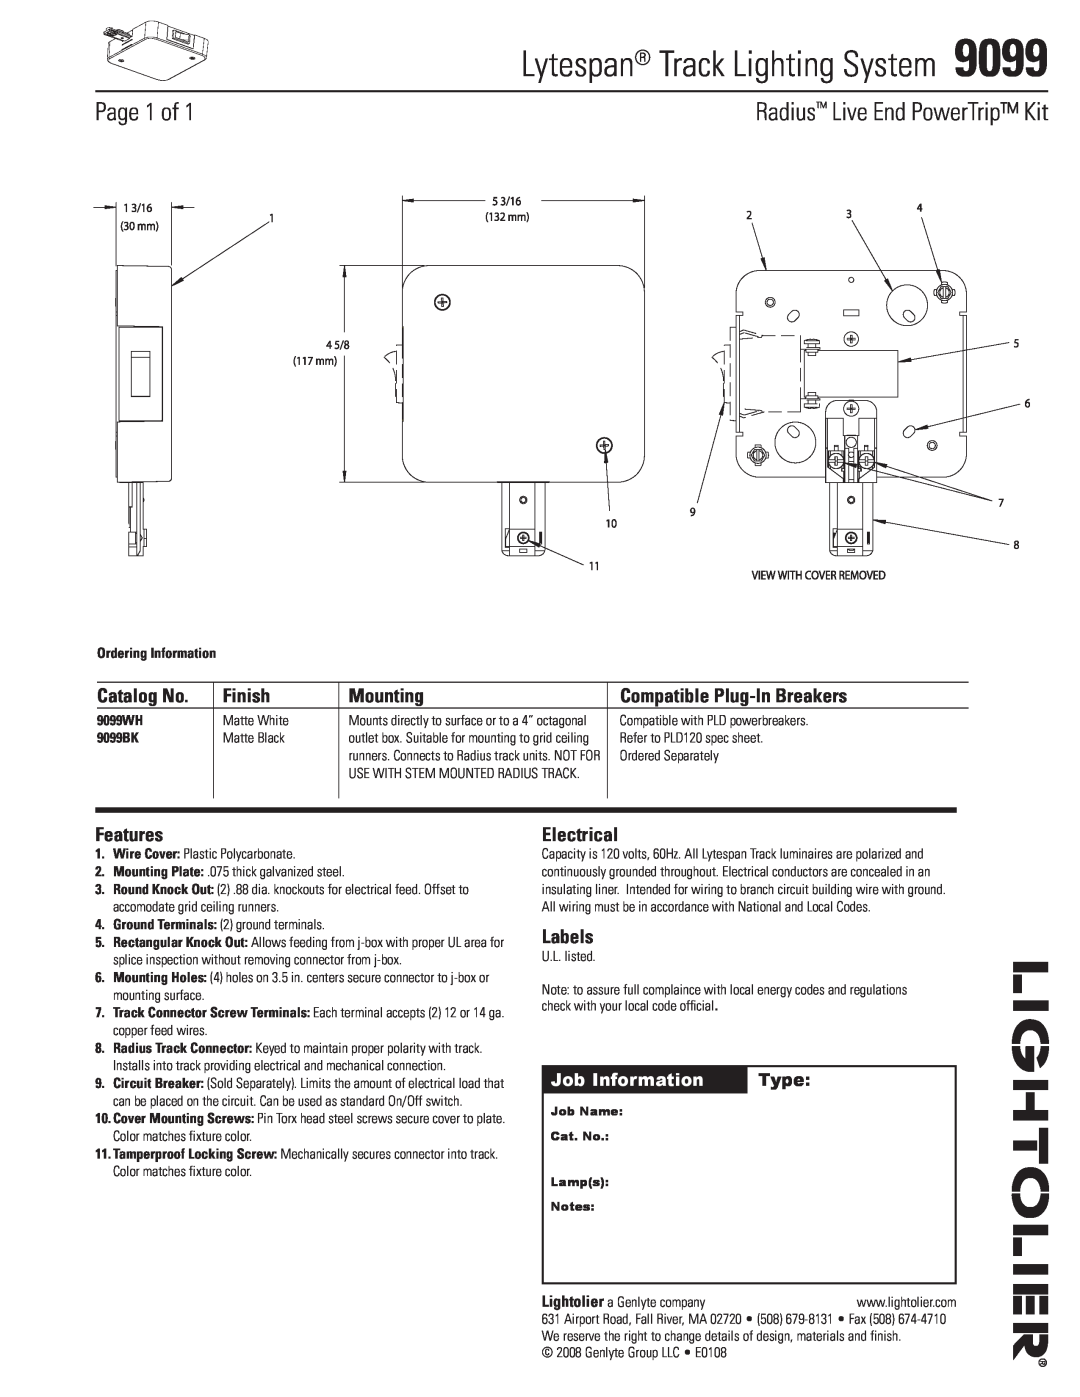 Lightolier 9099 manual Lytespan Track Lighting System, Page 1 of, Radius Live End PowerTrip Kit, Catalog No, Finish, Type 